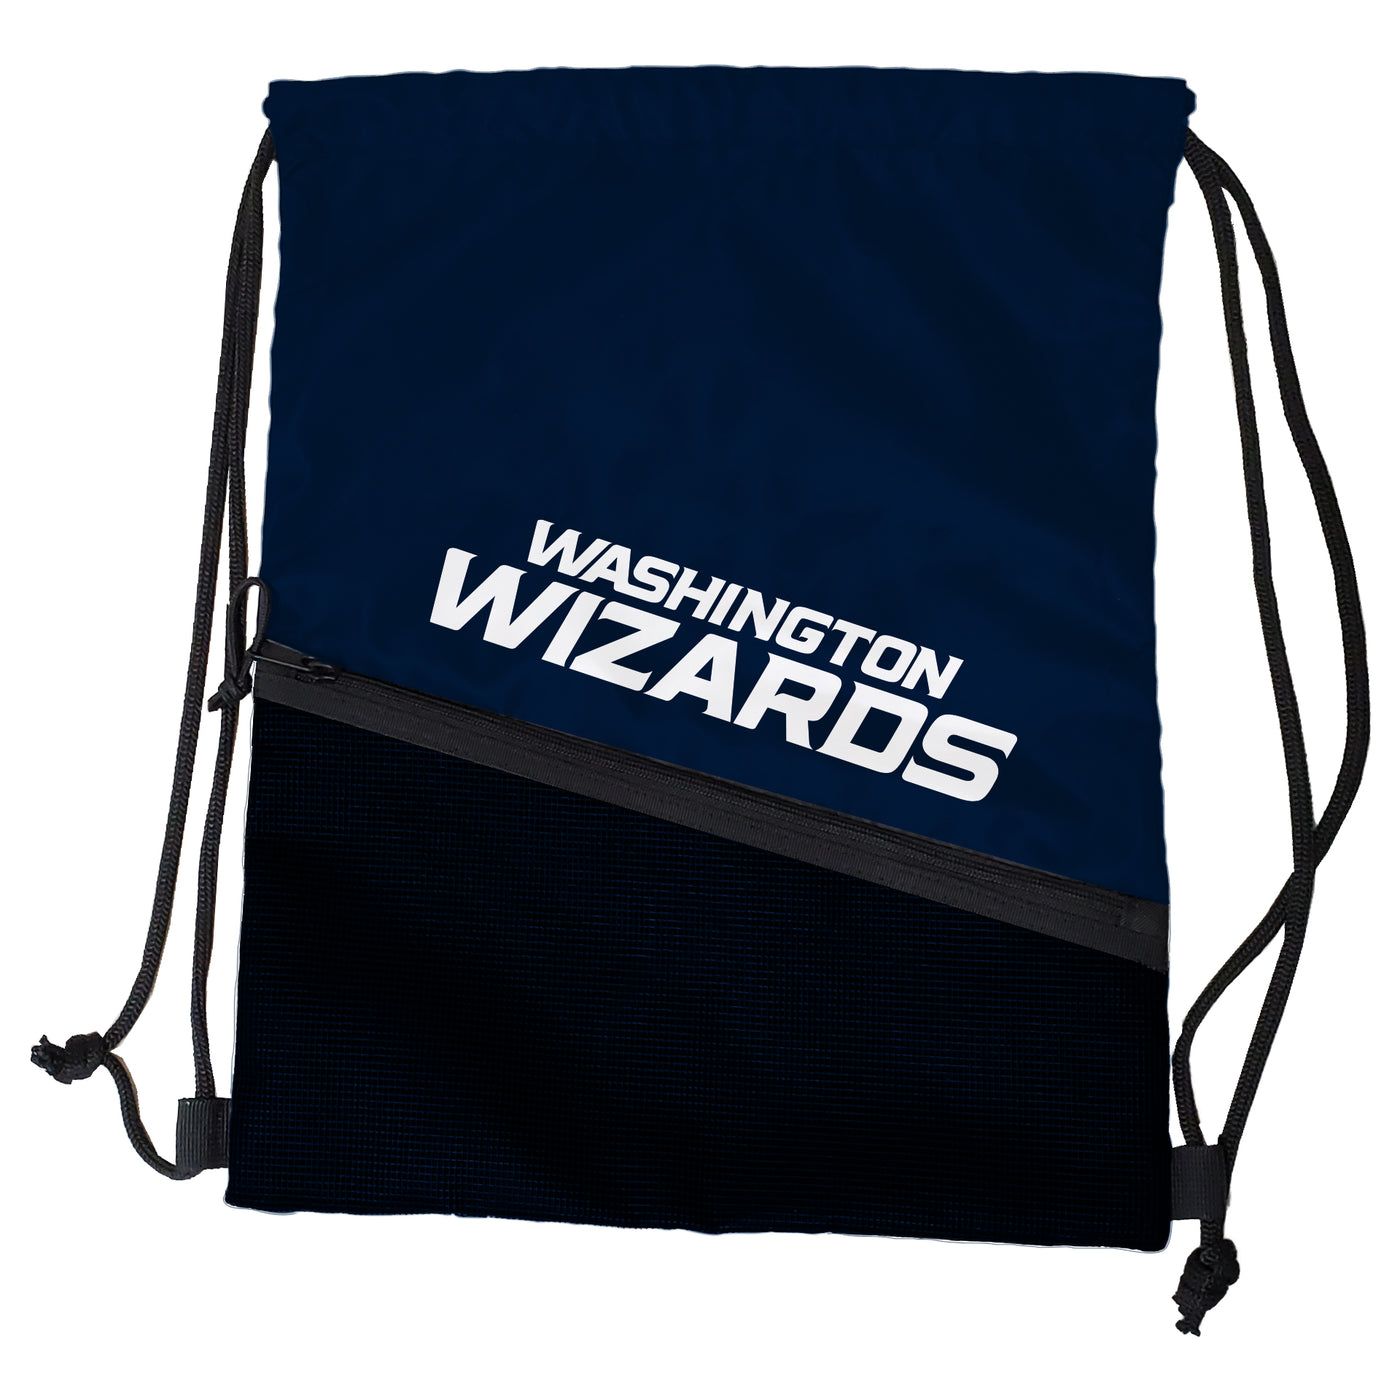 Washington Wizards Tilt Backsack